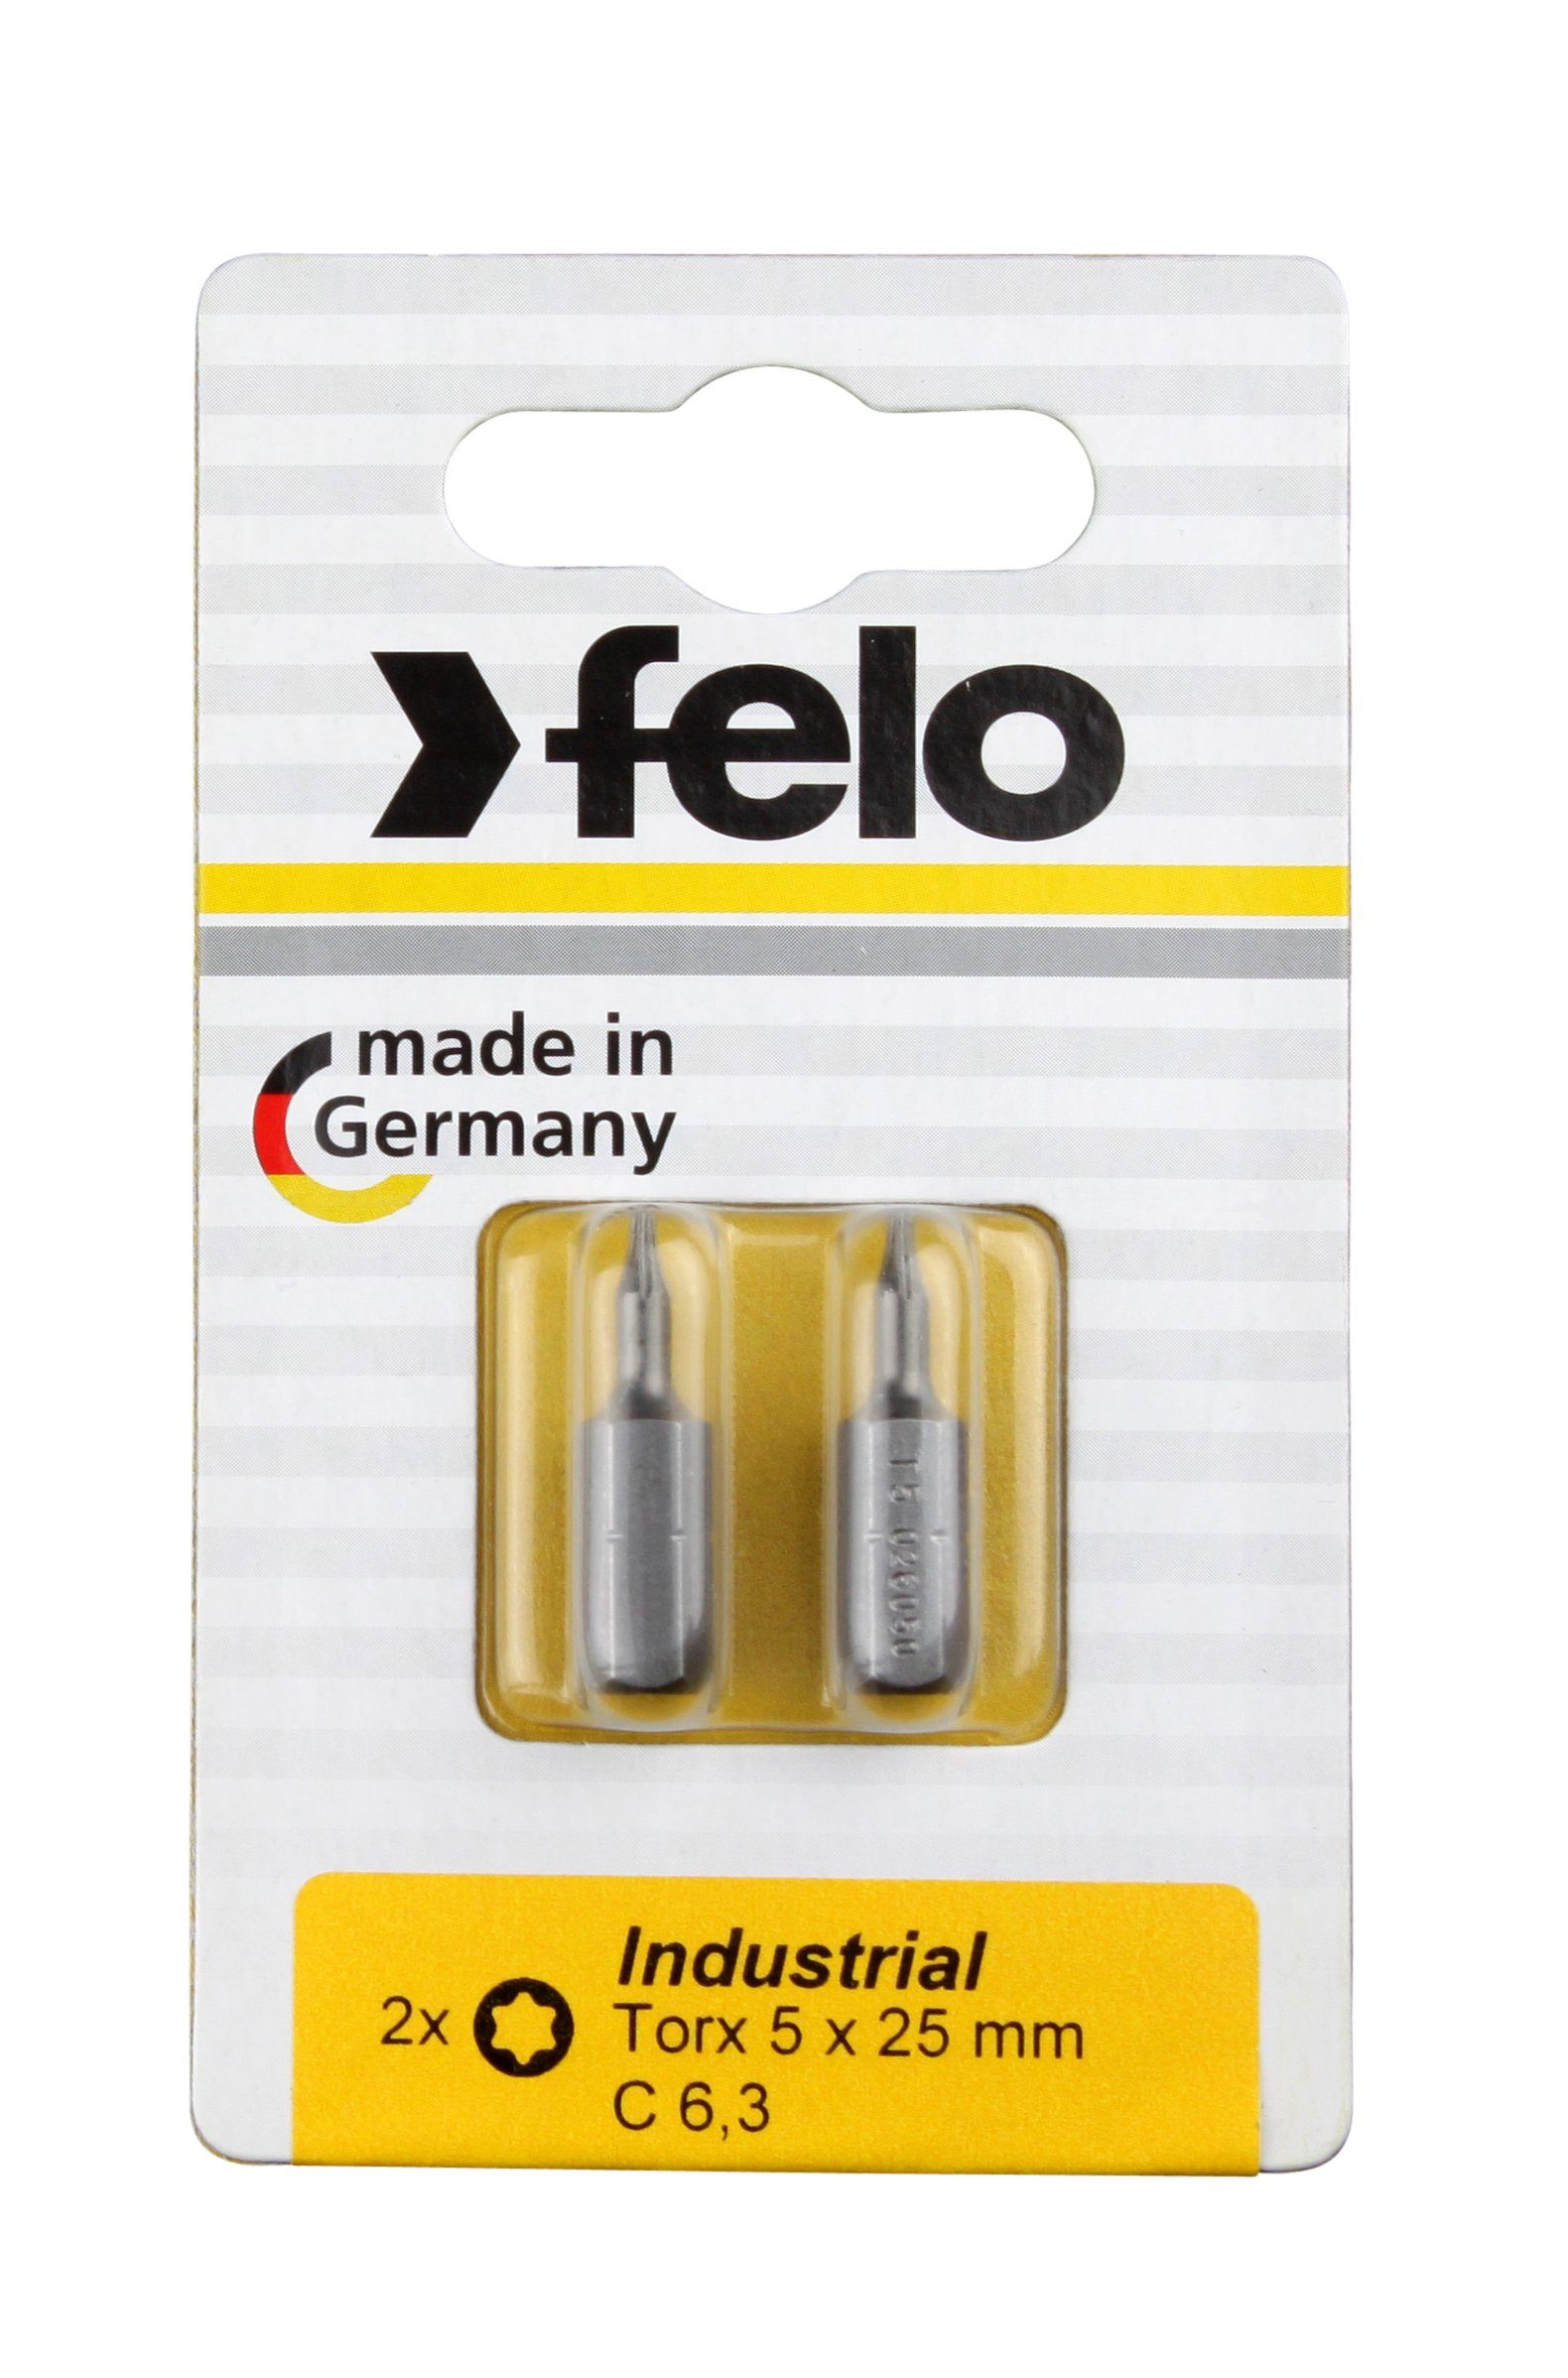 Felo Torx-Bit Felo Bit, Industrie C 6,3 x 25mm, 2 Stk auf Karte 2x Tx 7